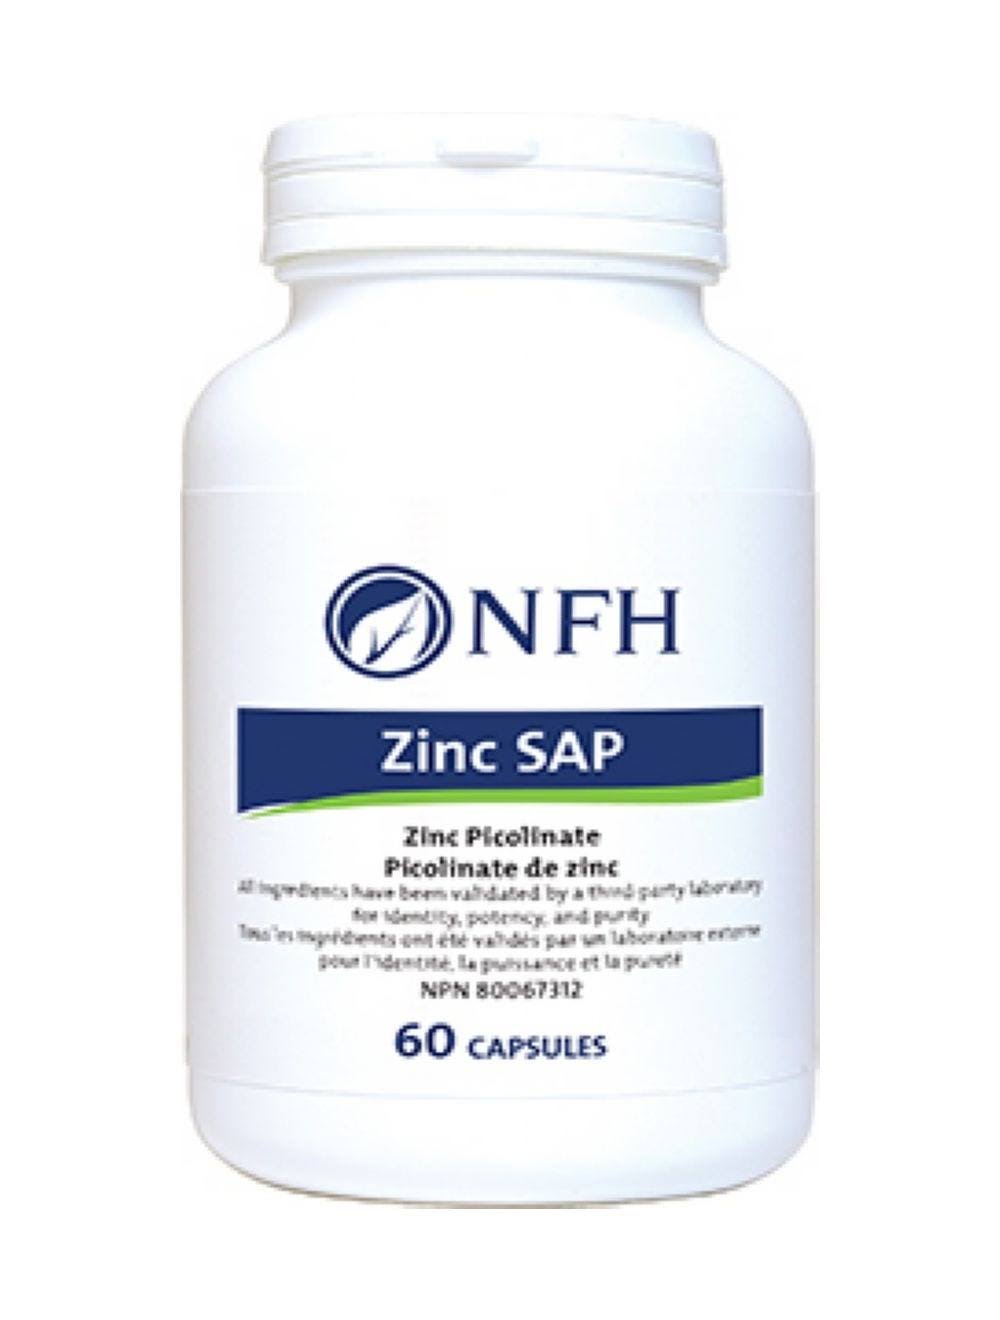 Nfh Zinc Sap Capsules - 60ct